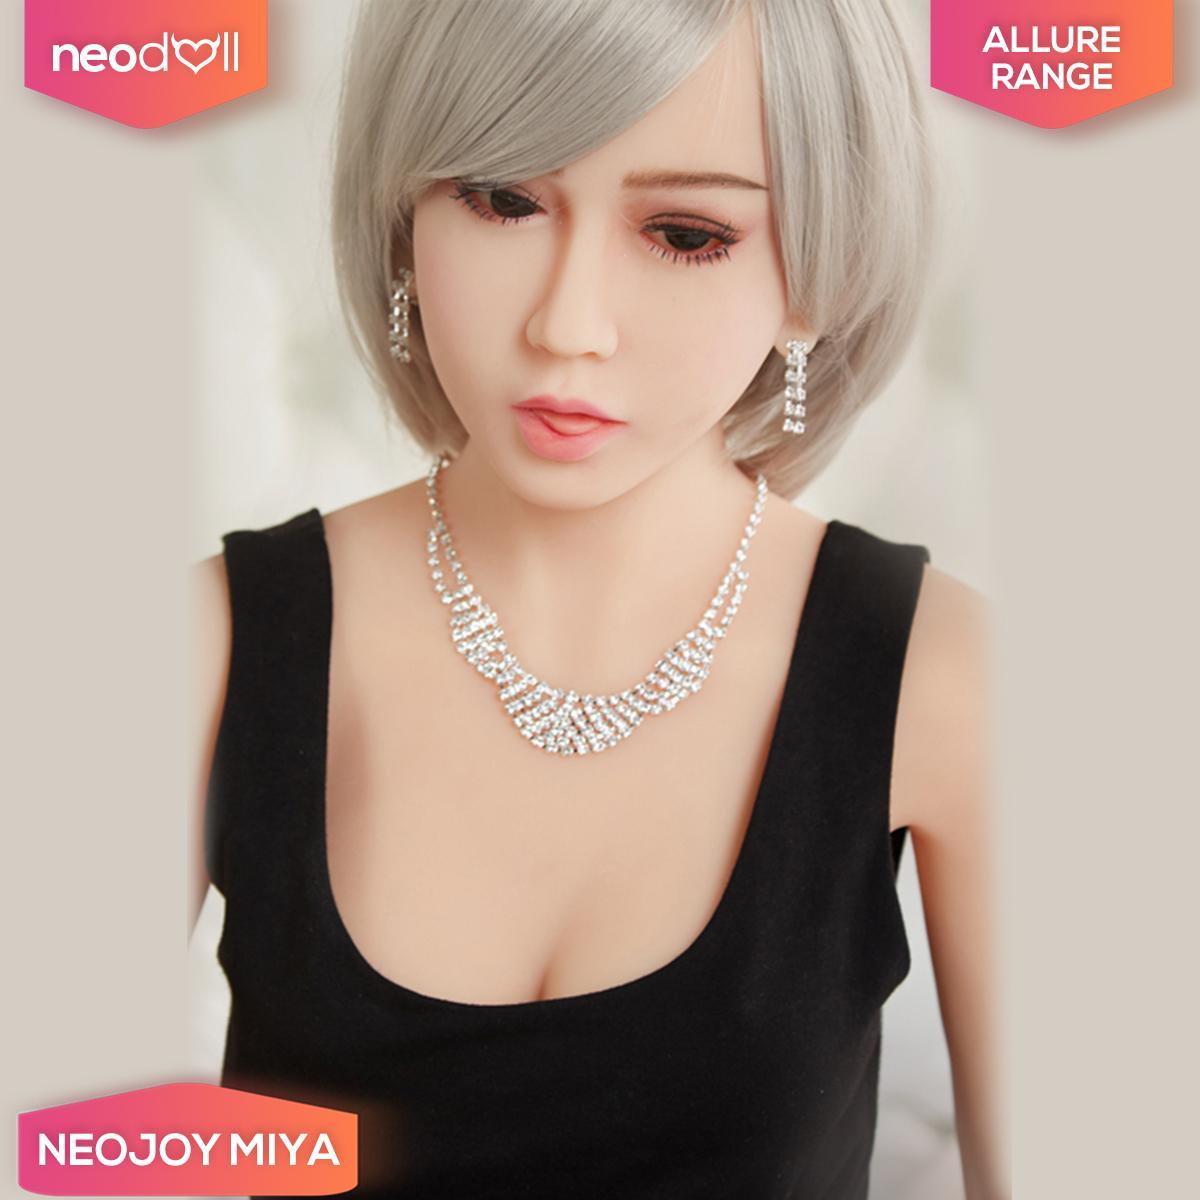 Sex Doll Miya | 169cm Height | Natural Skin | Standing | Neodoll Allure